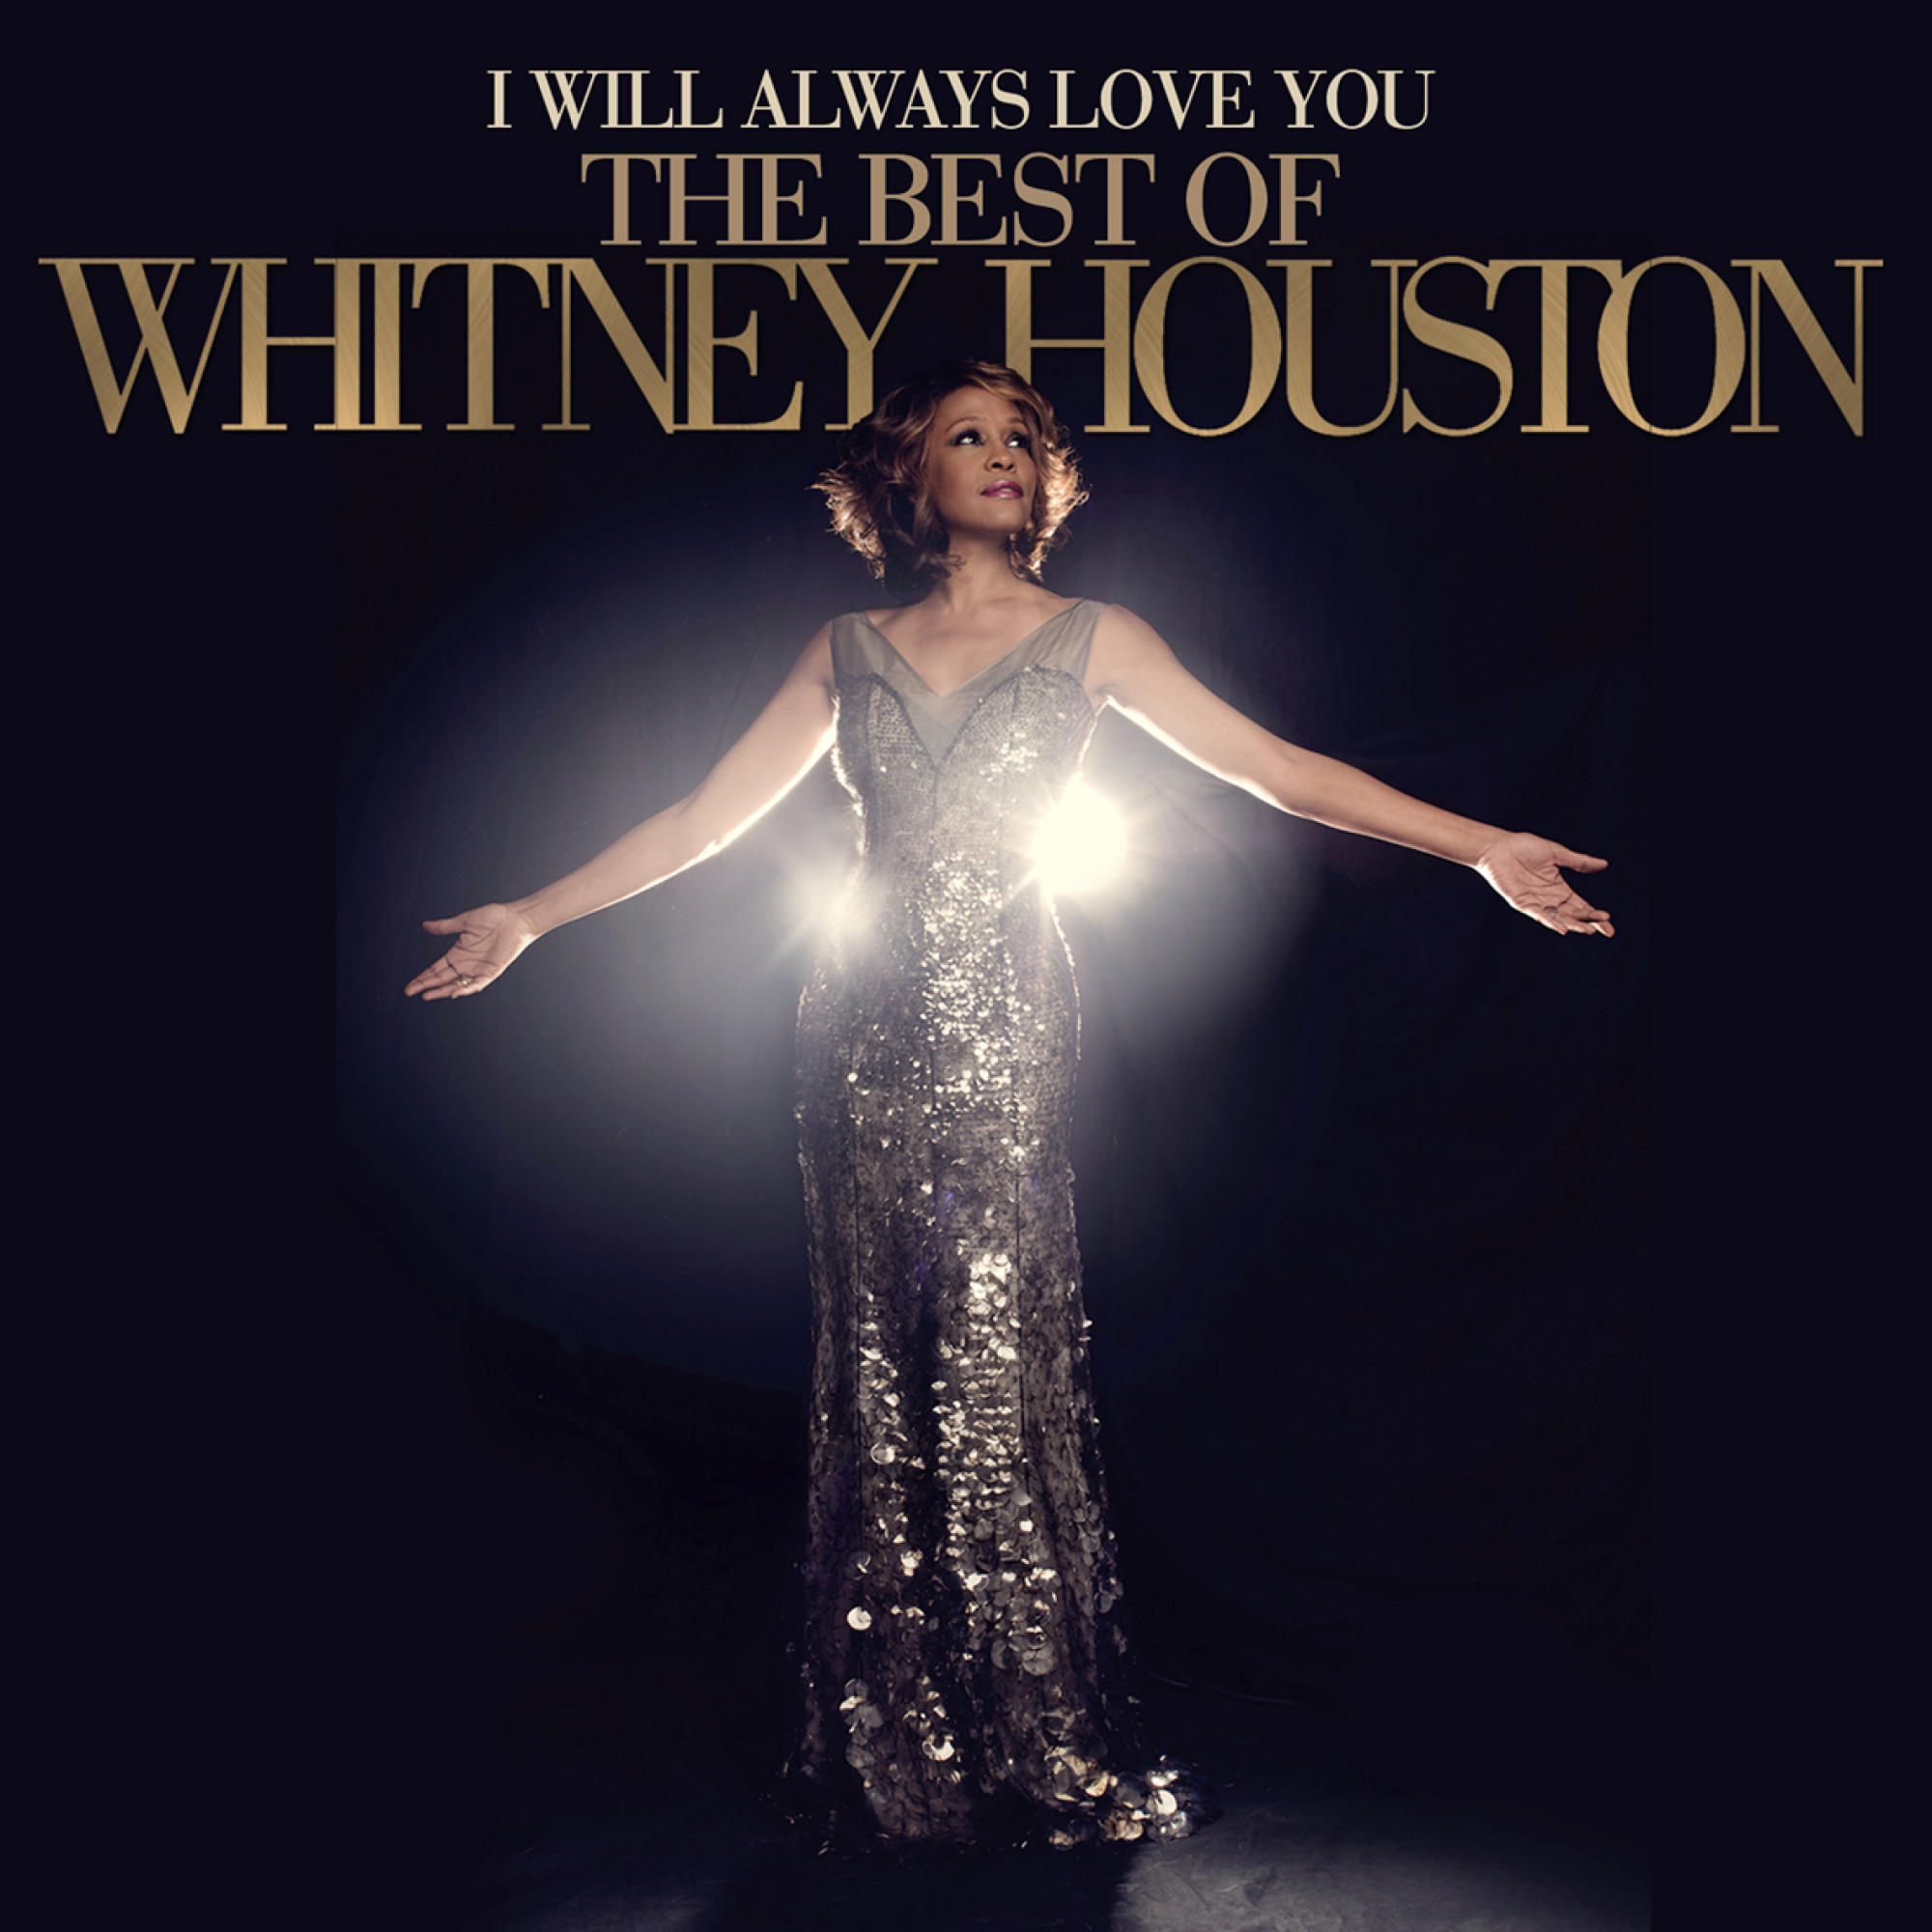 Whitney Houston - Best Whitney Always The - Love (CD) Of Houston Will I You